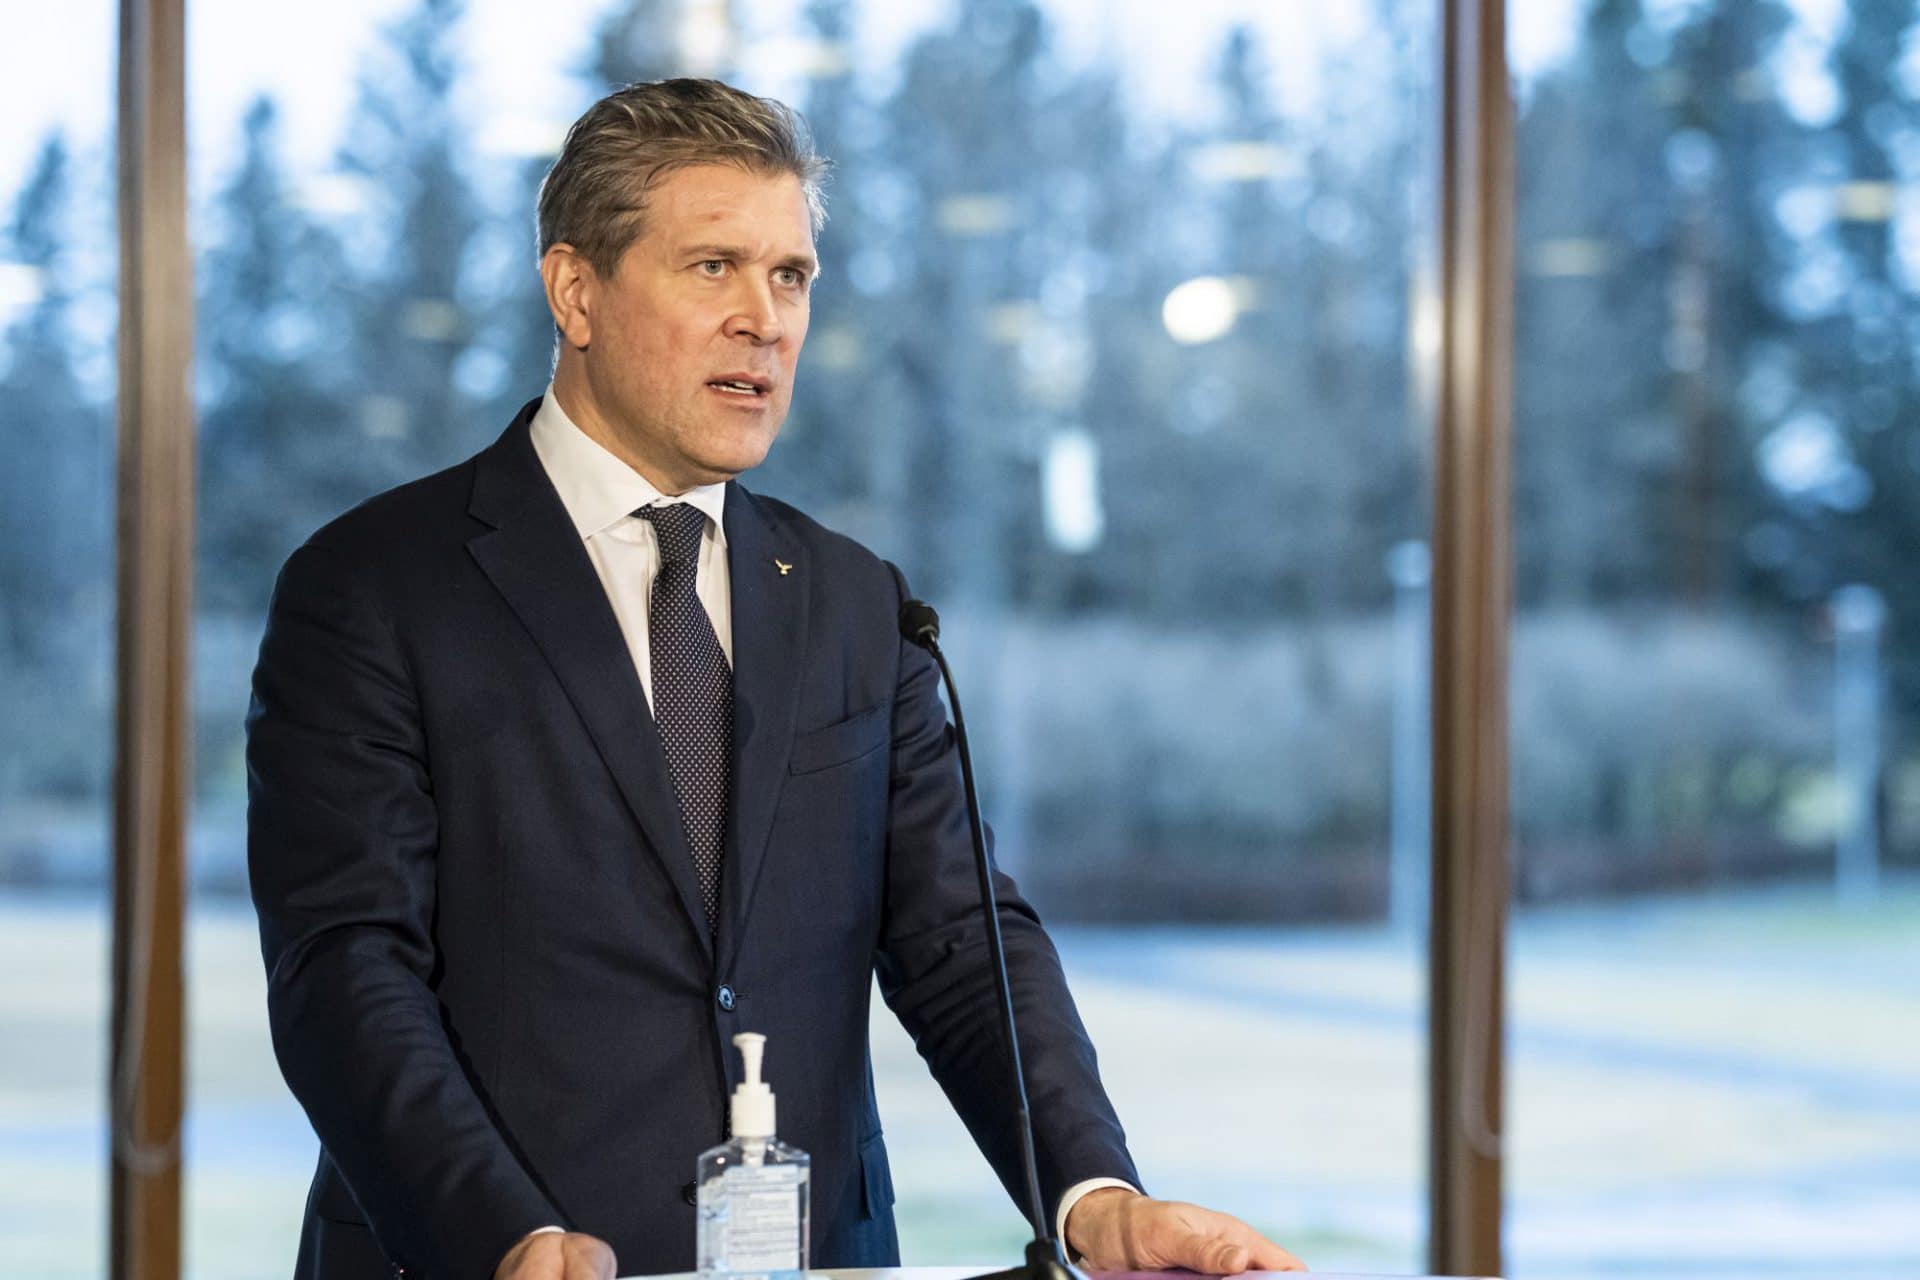 Bjarni Benediktsson to Resign from Politics if Successfully Challenged